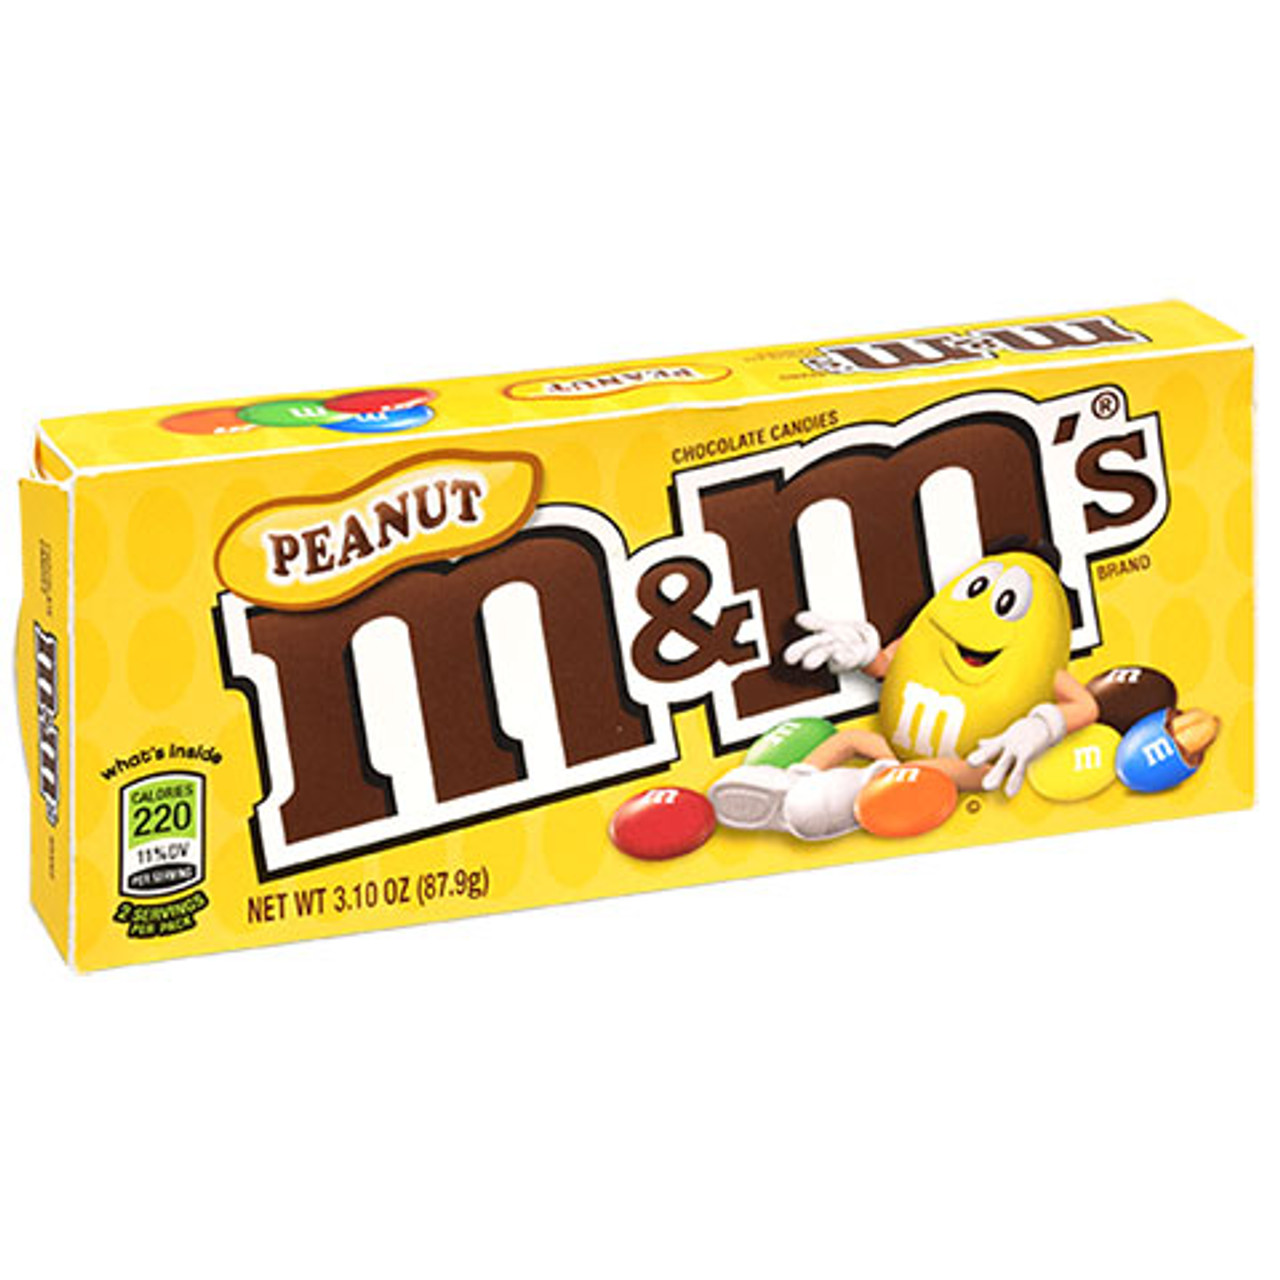 Peanut M & M's  Opie's Candy Store